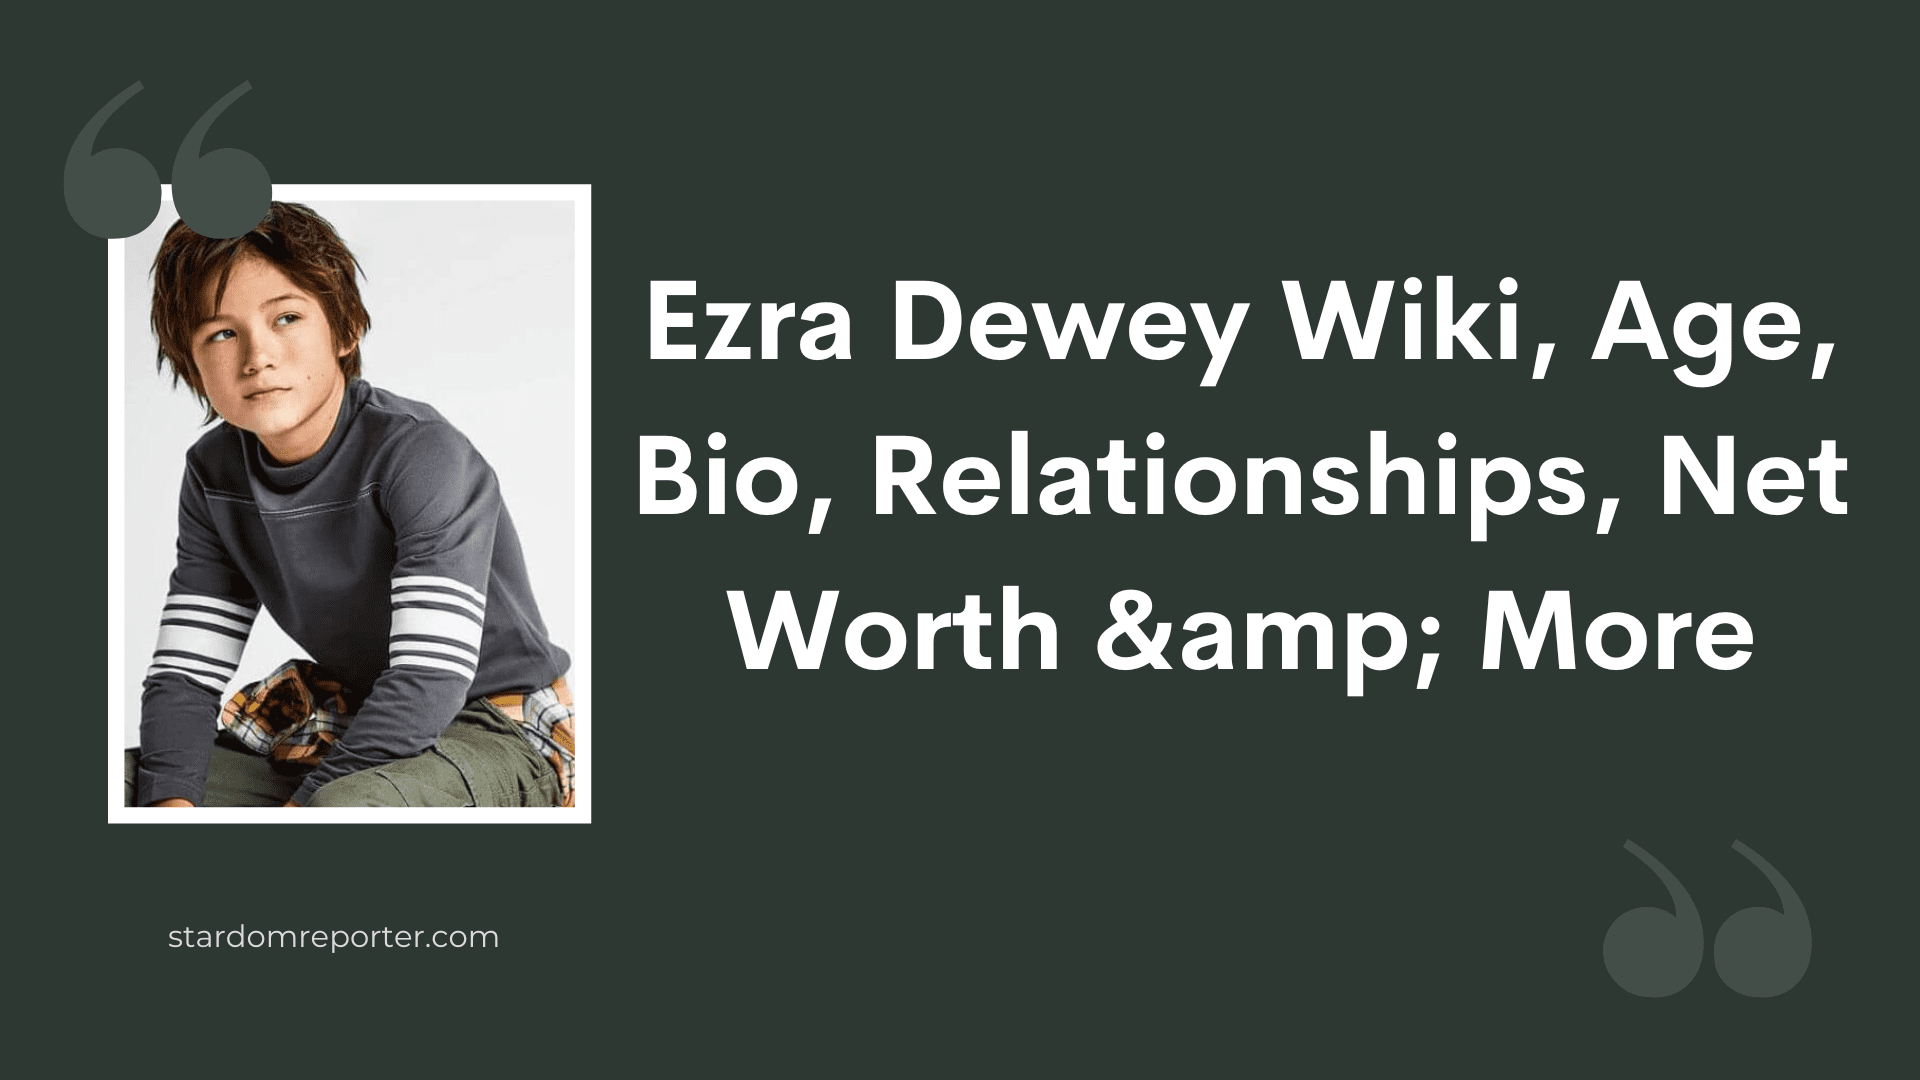 Ezra Dewey Wiki, Age, Bio, Relationships, Net Worth & More - 31